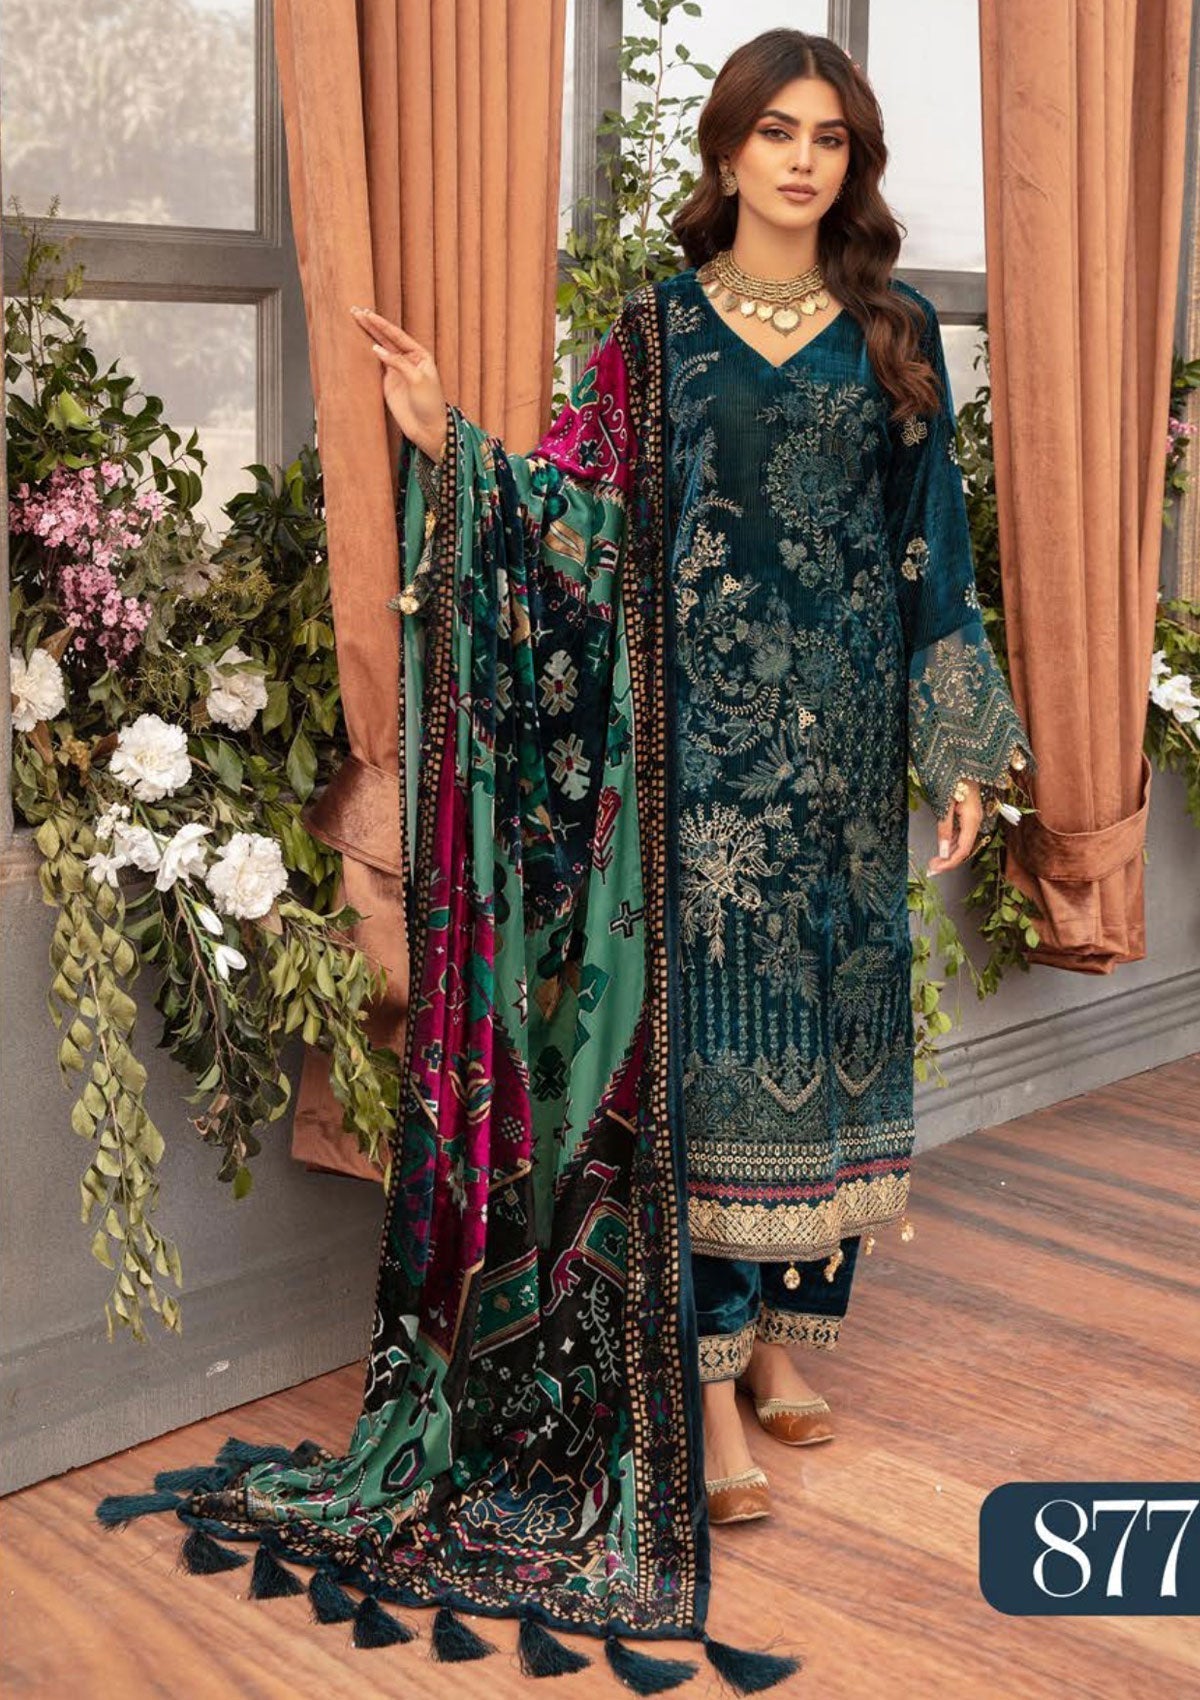 Winter Collection - Shaista - Kotrai Velvet - D#877 available at Saleem Fabrics Traditions